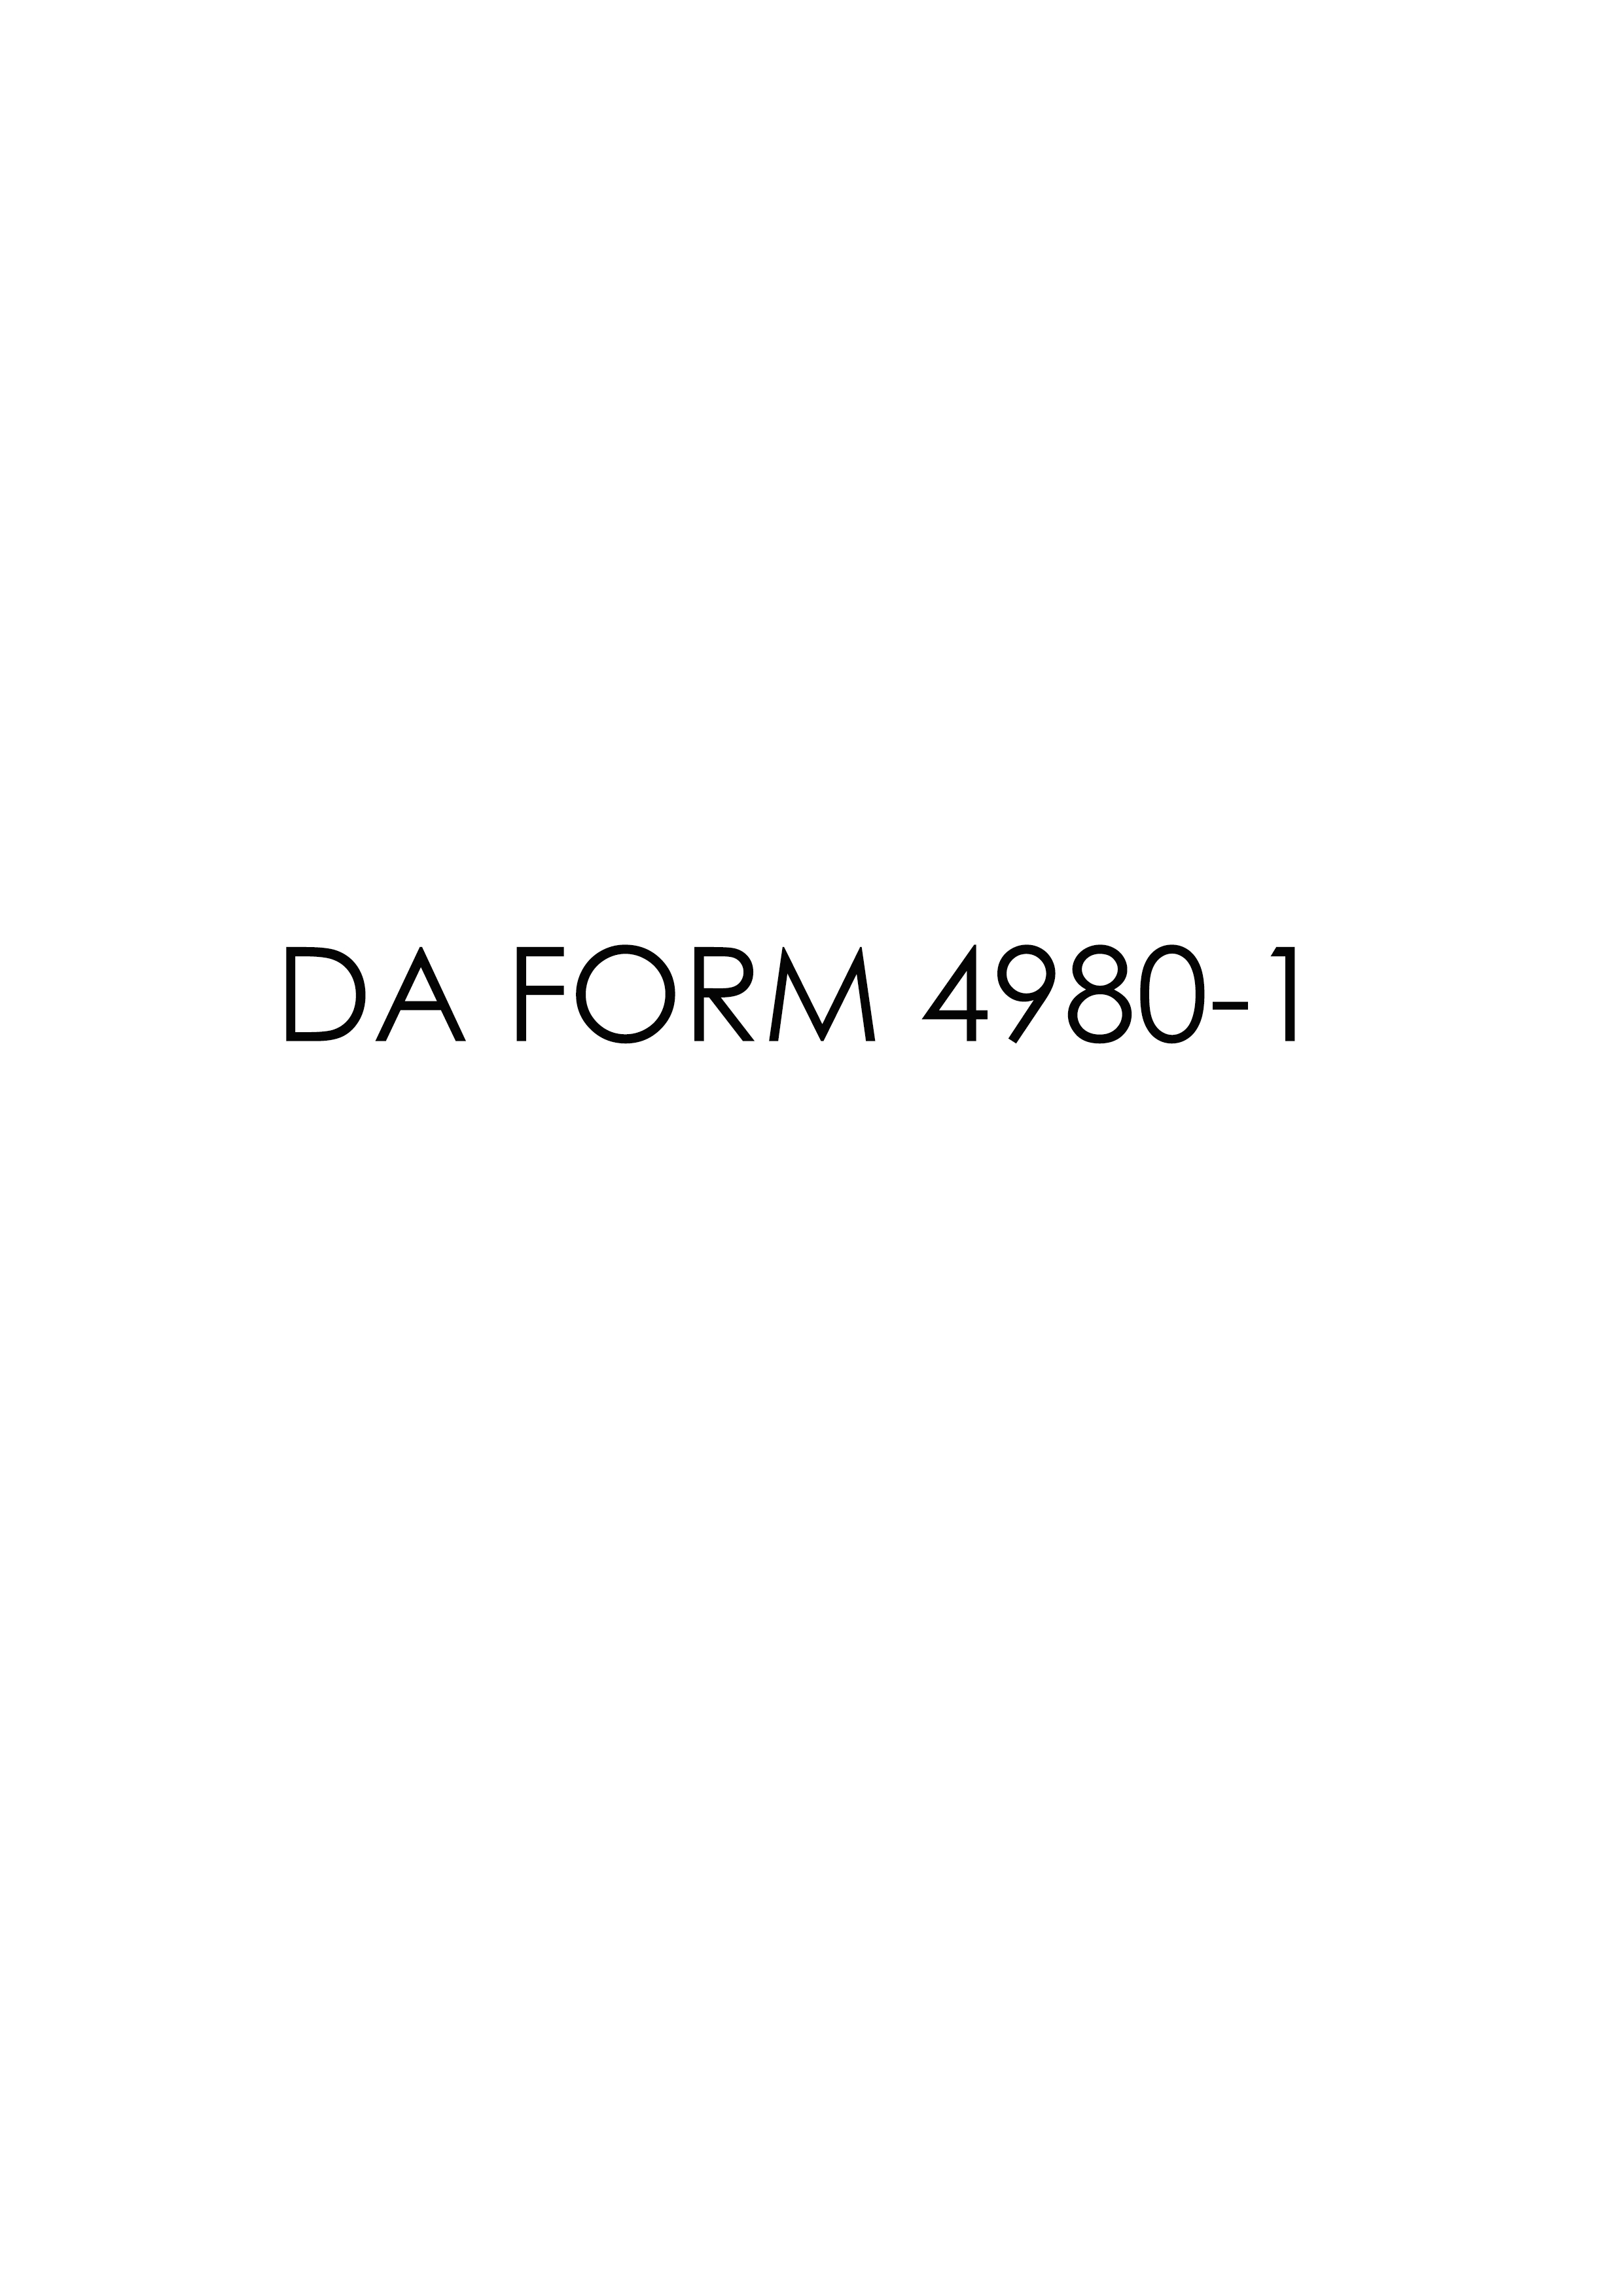 da Form 4980-1 fillable